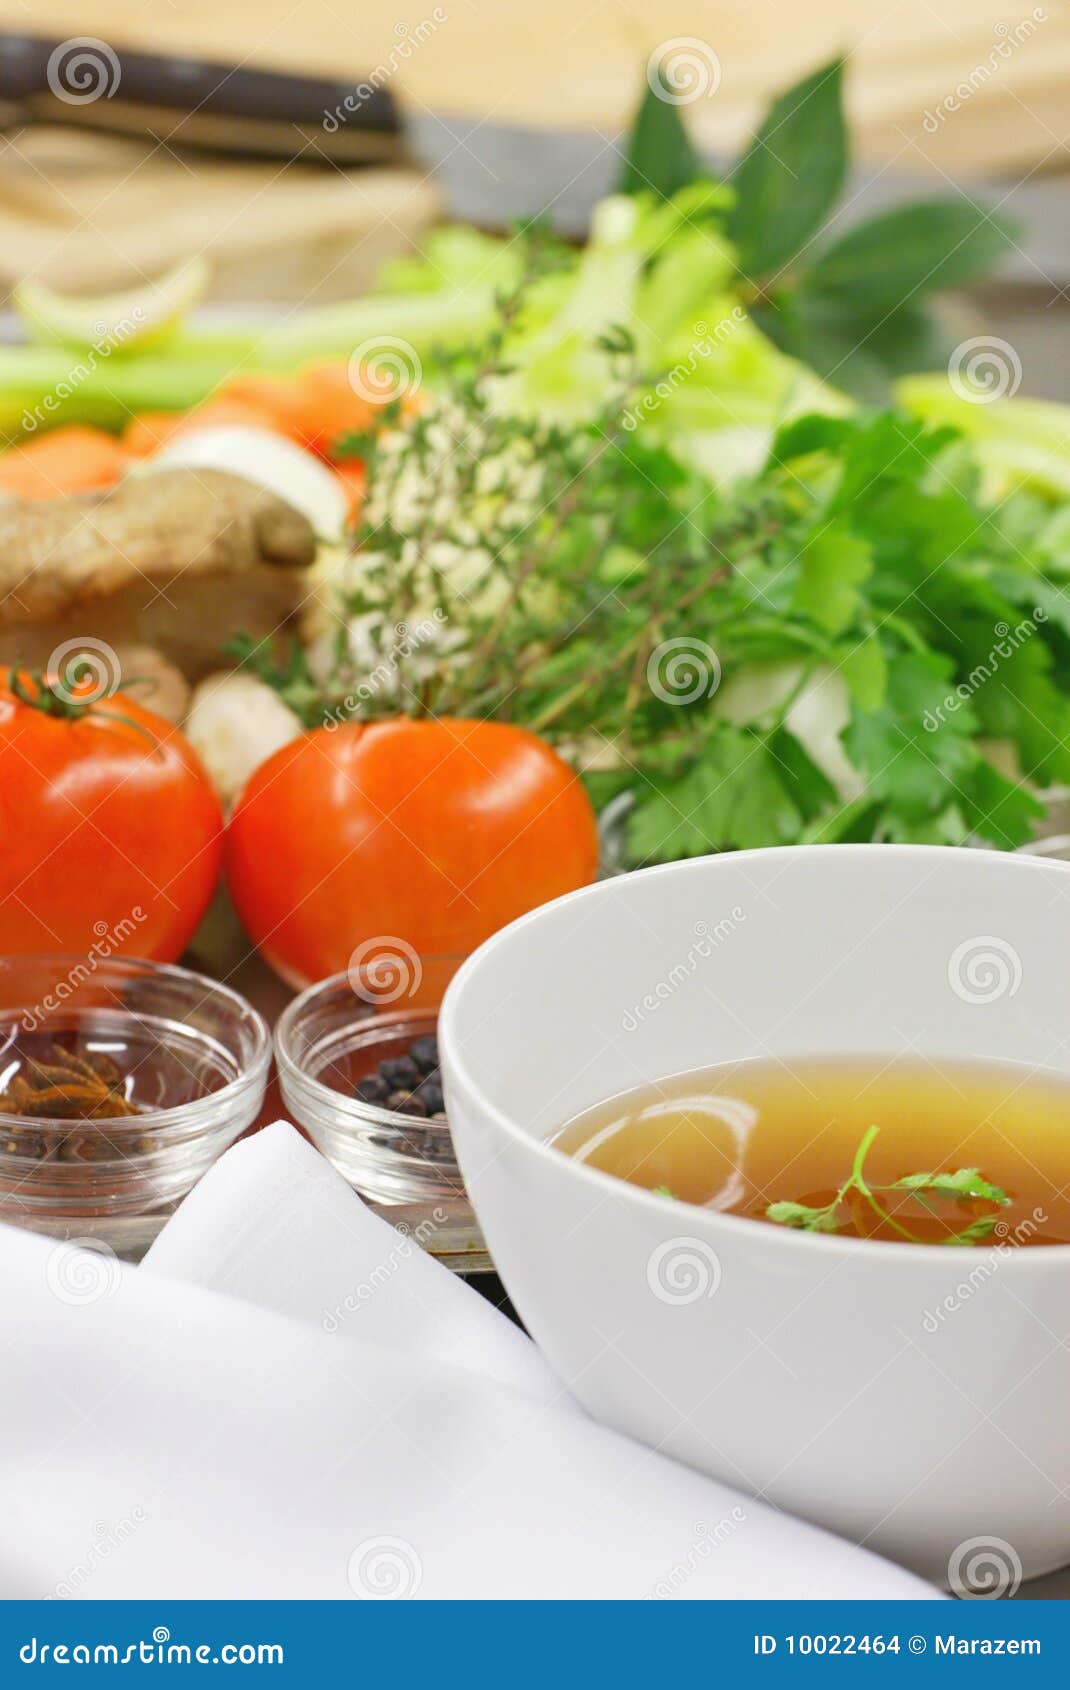 vegetable bouillon